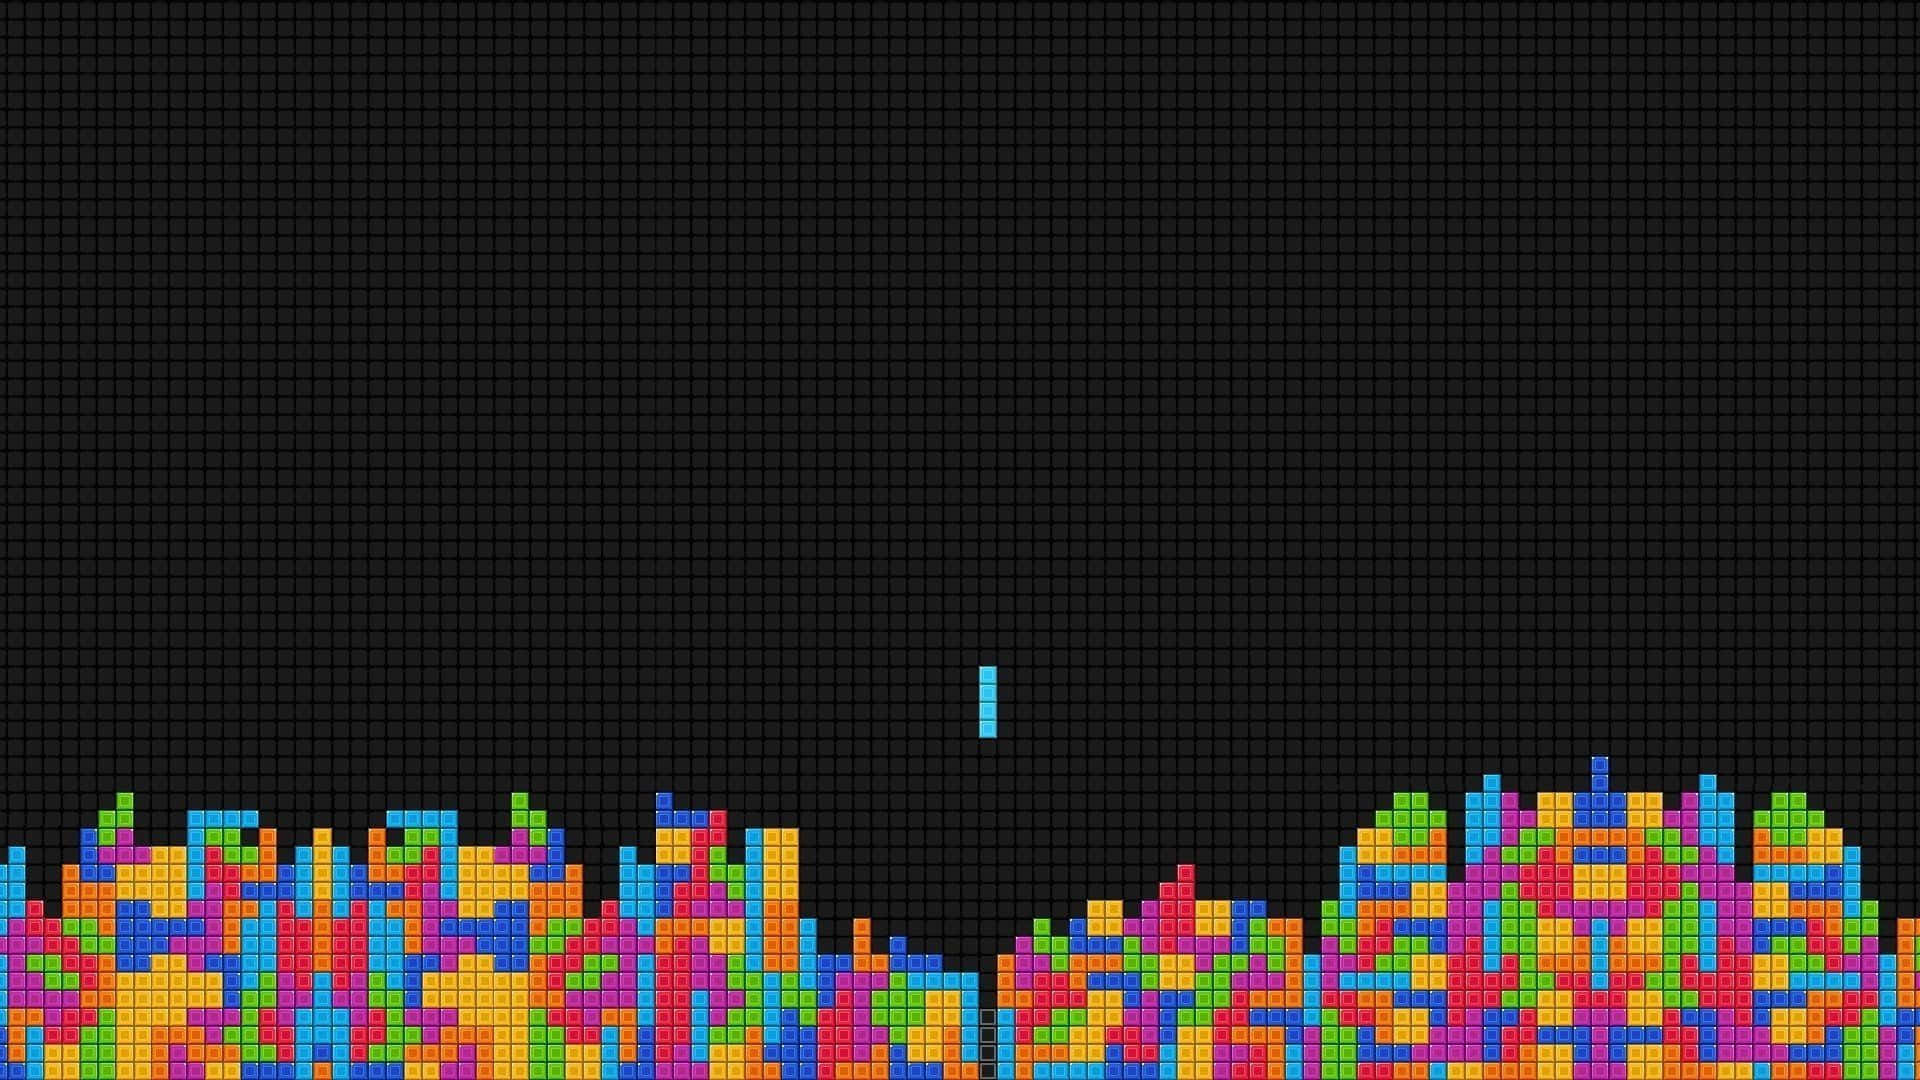 Tetris1920 X 1080 Baggrund.